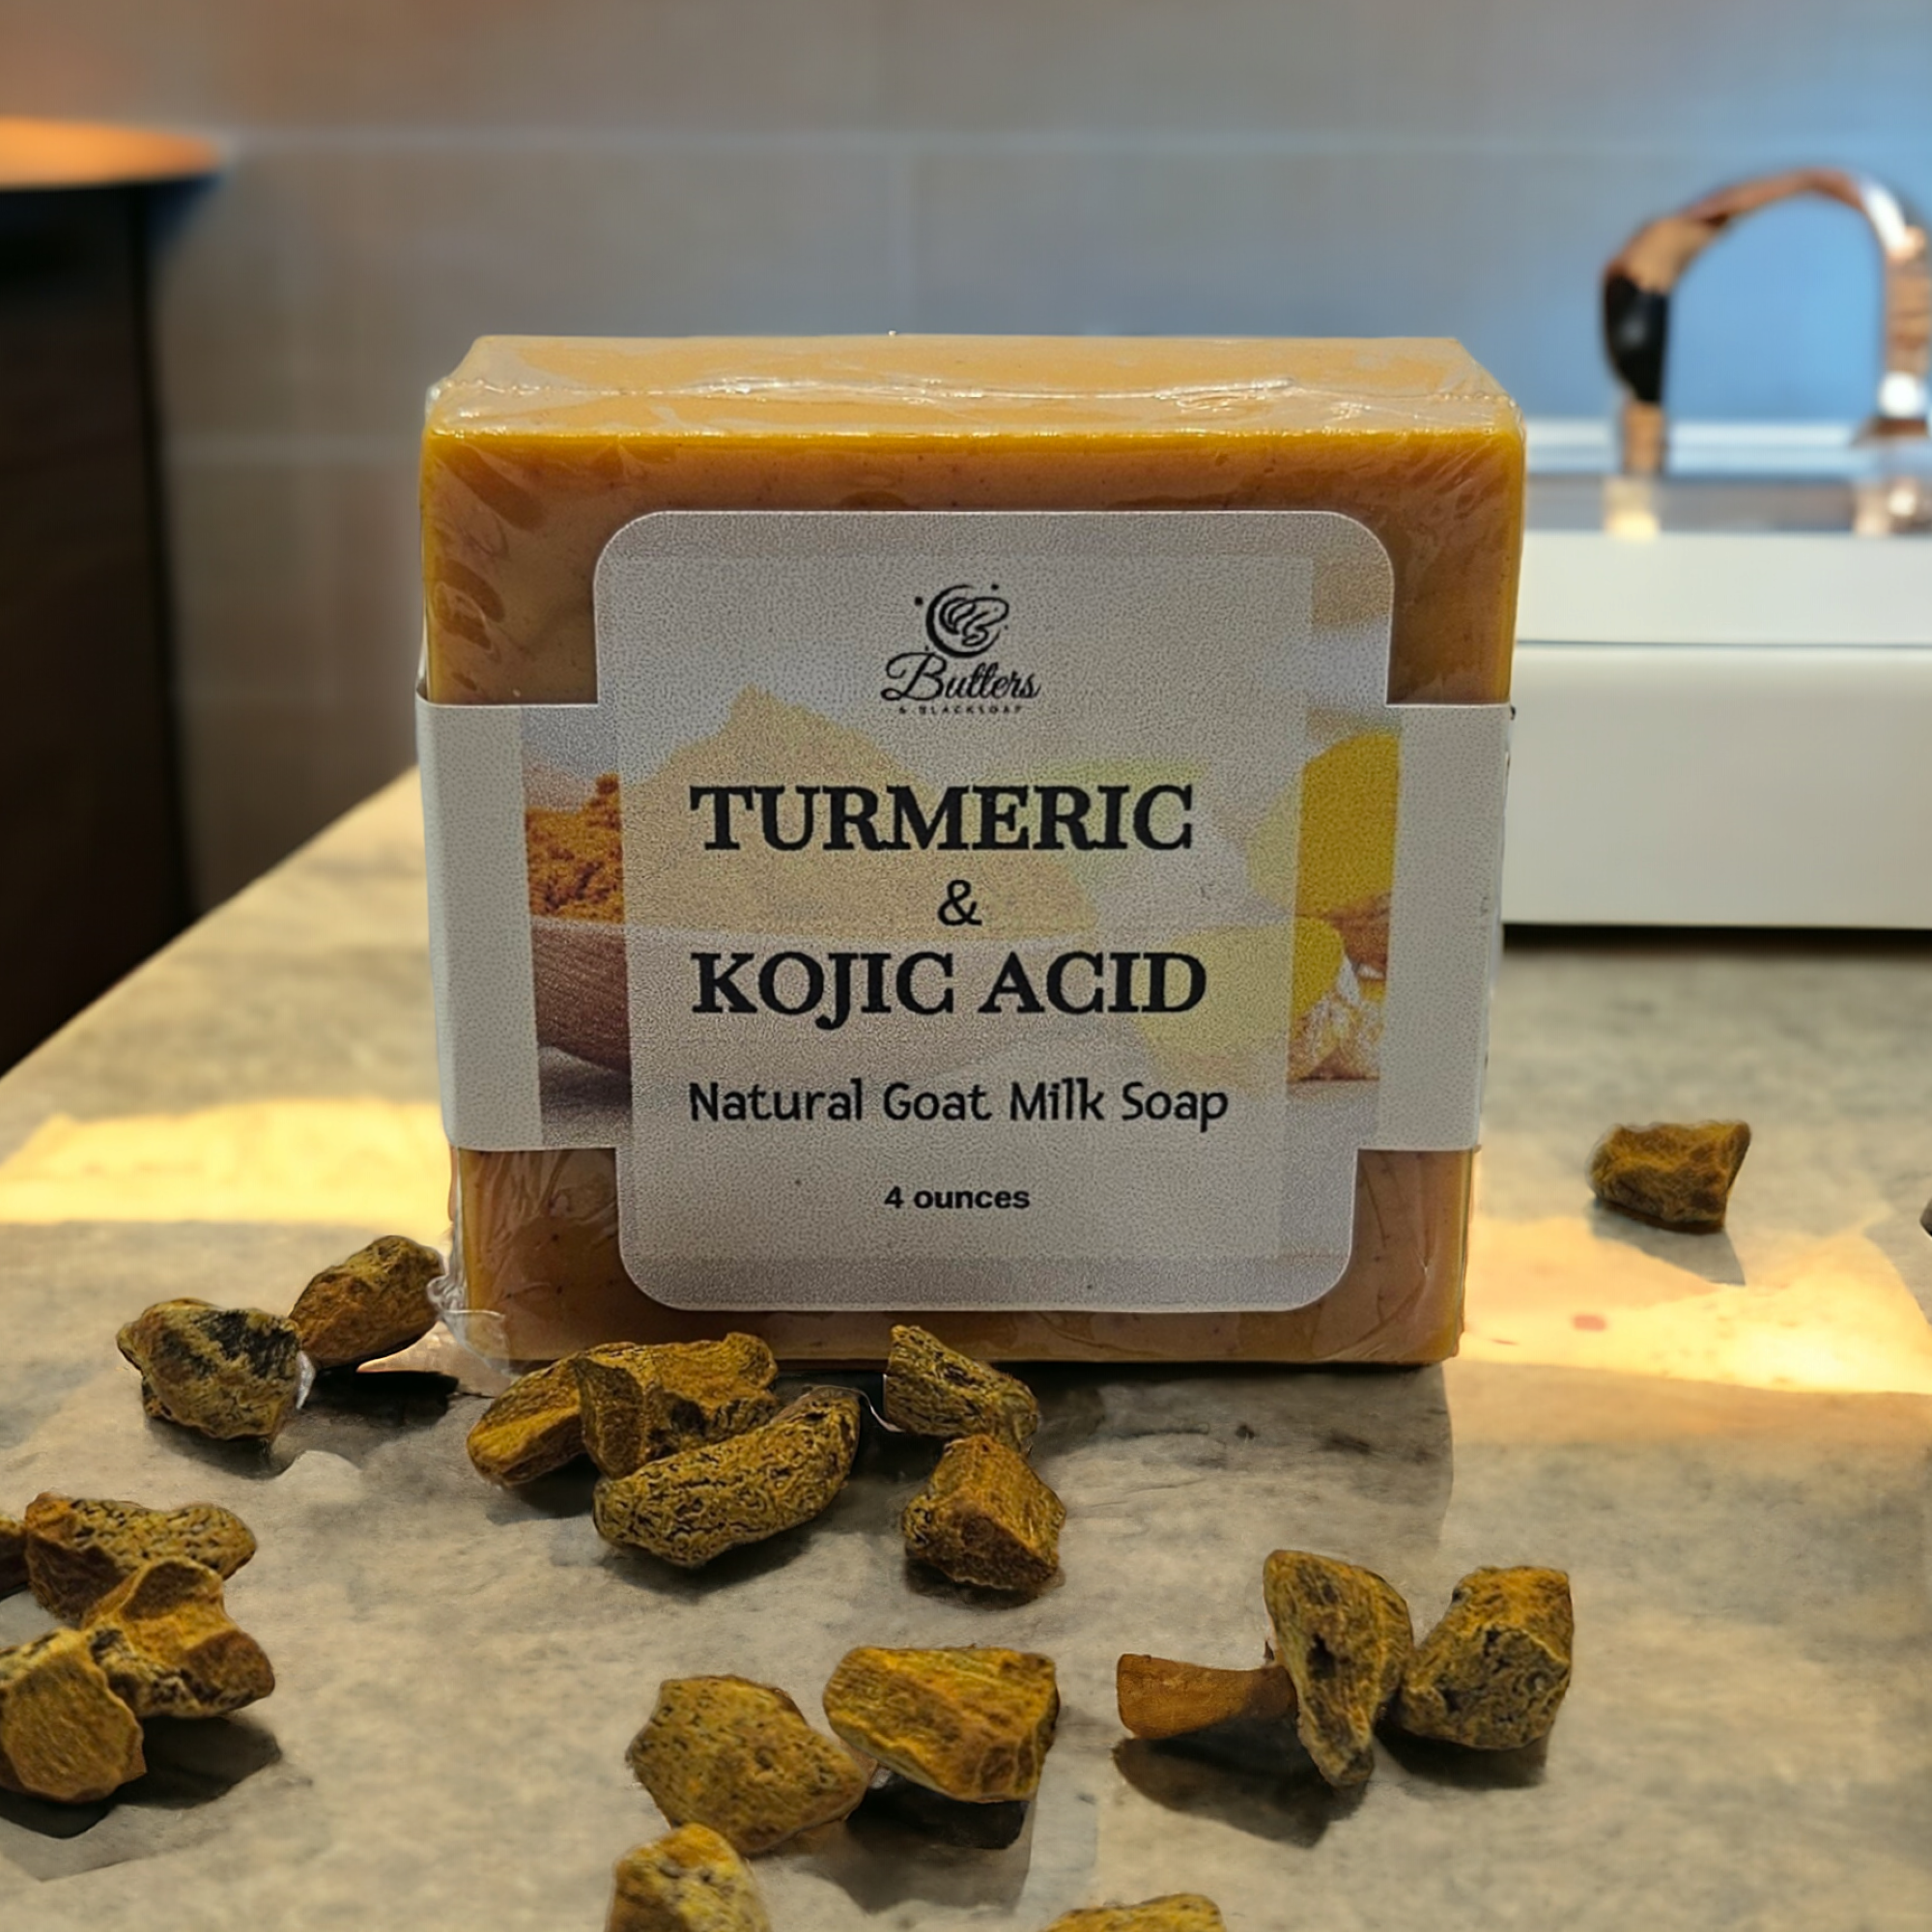 A bar of turmeric and kojic acid soap